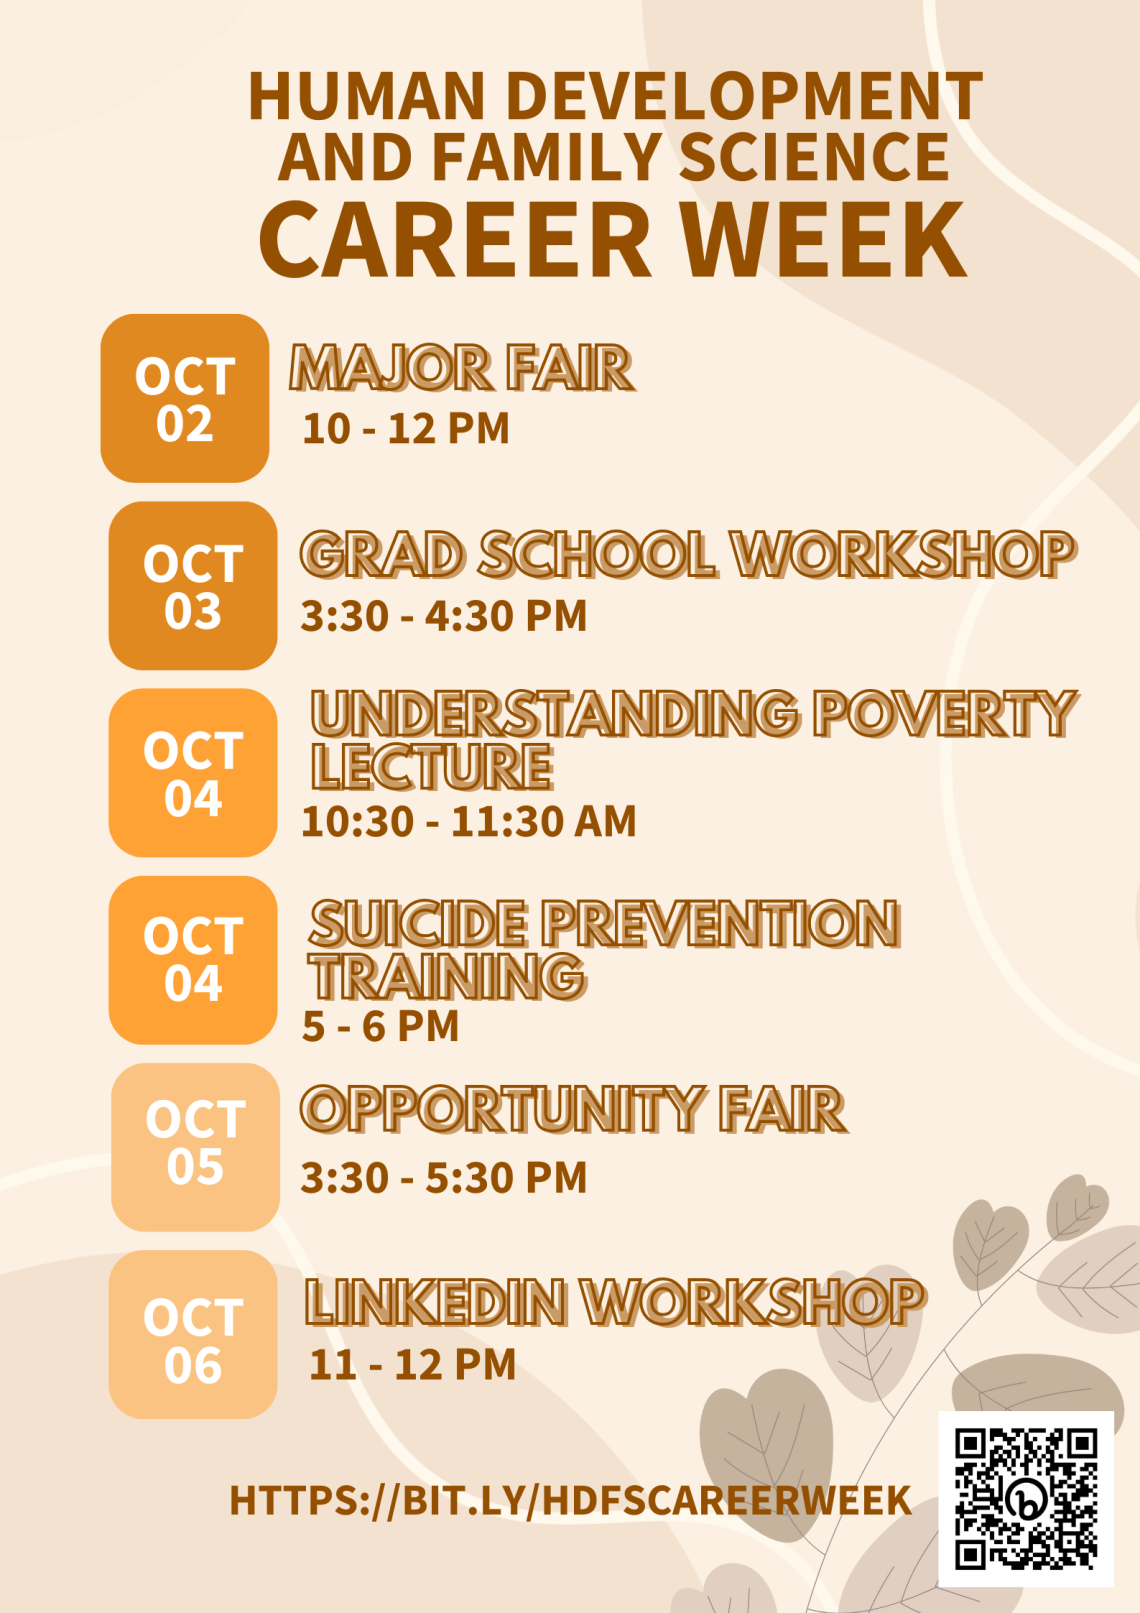 HDFS Career Week Schedule of Events